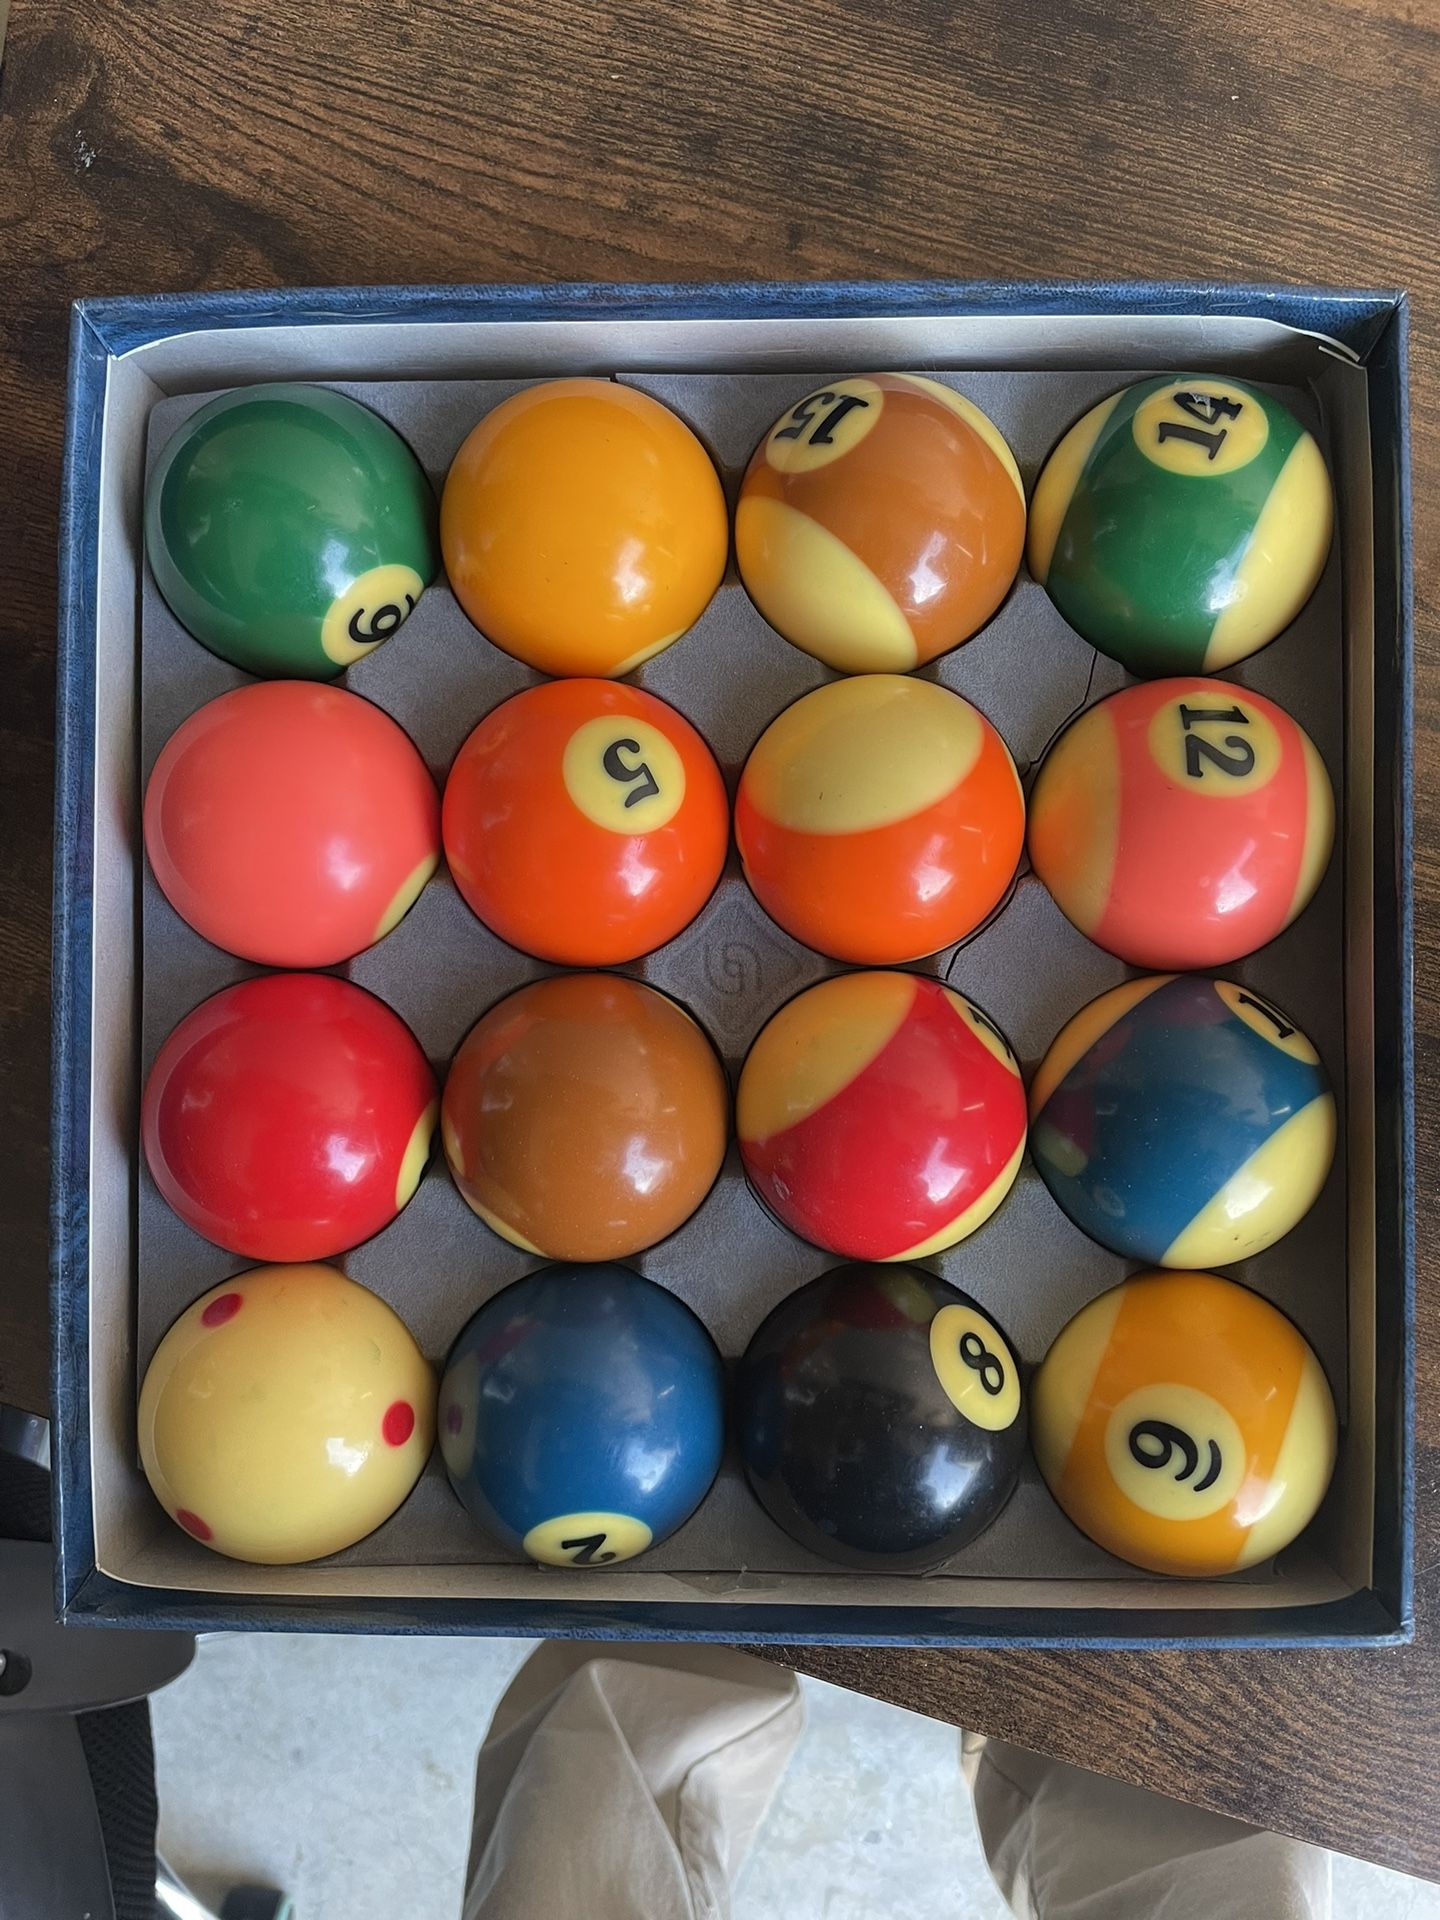 Belgium Aramith Balls